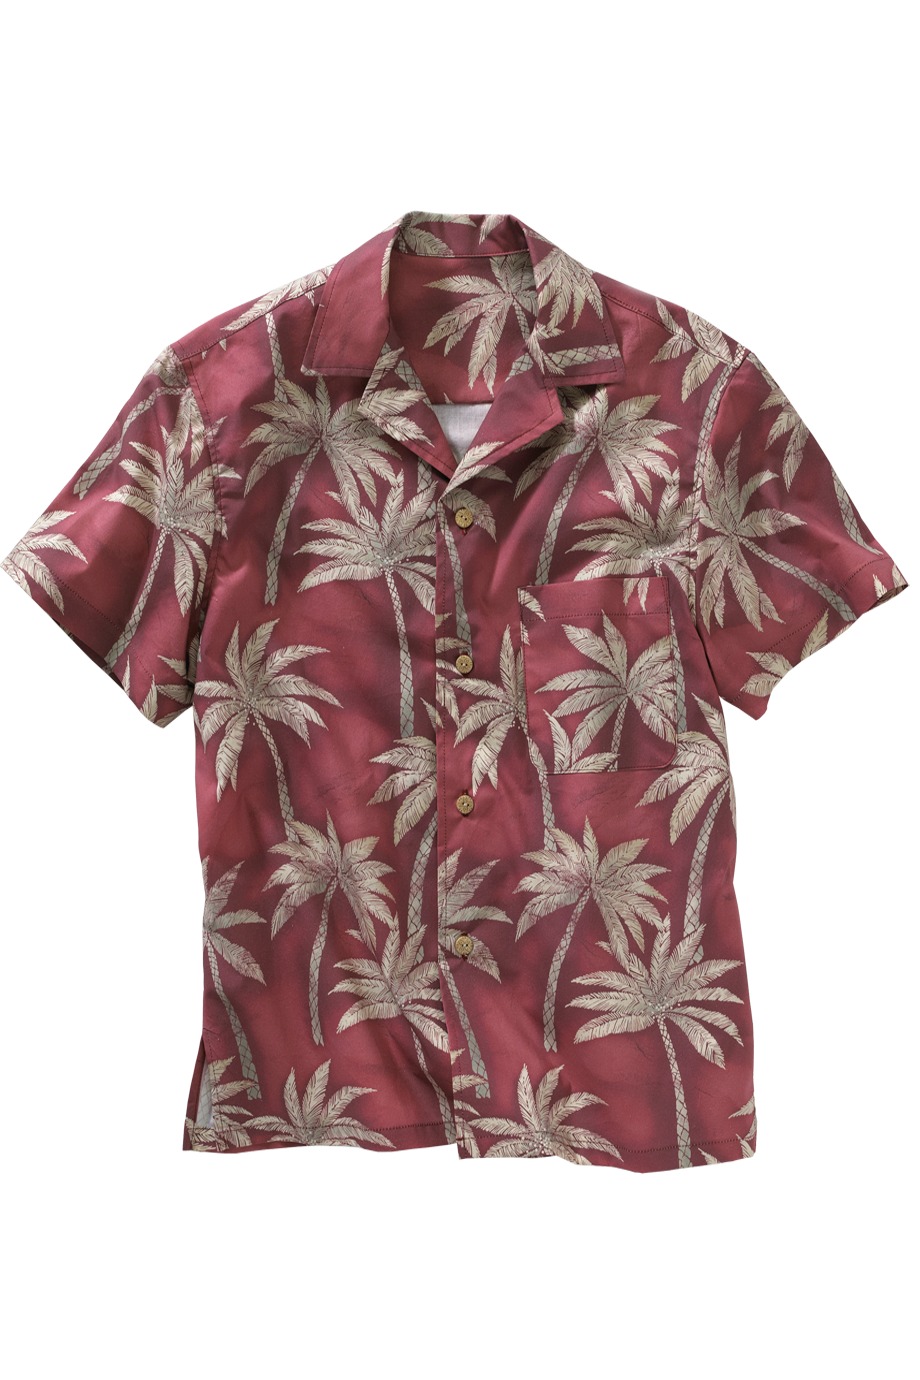 Edwards Garment 1034 - Palm Tree Camp Shirt